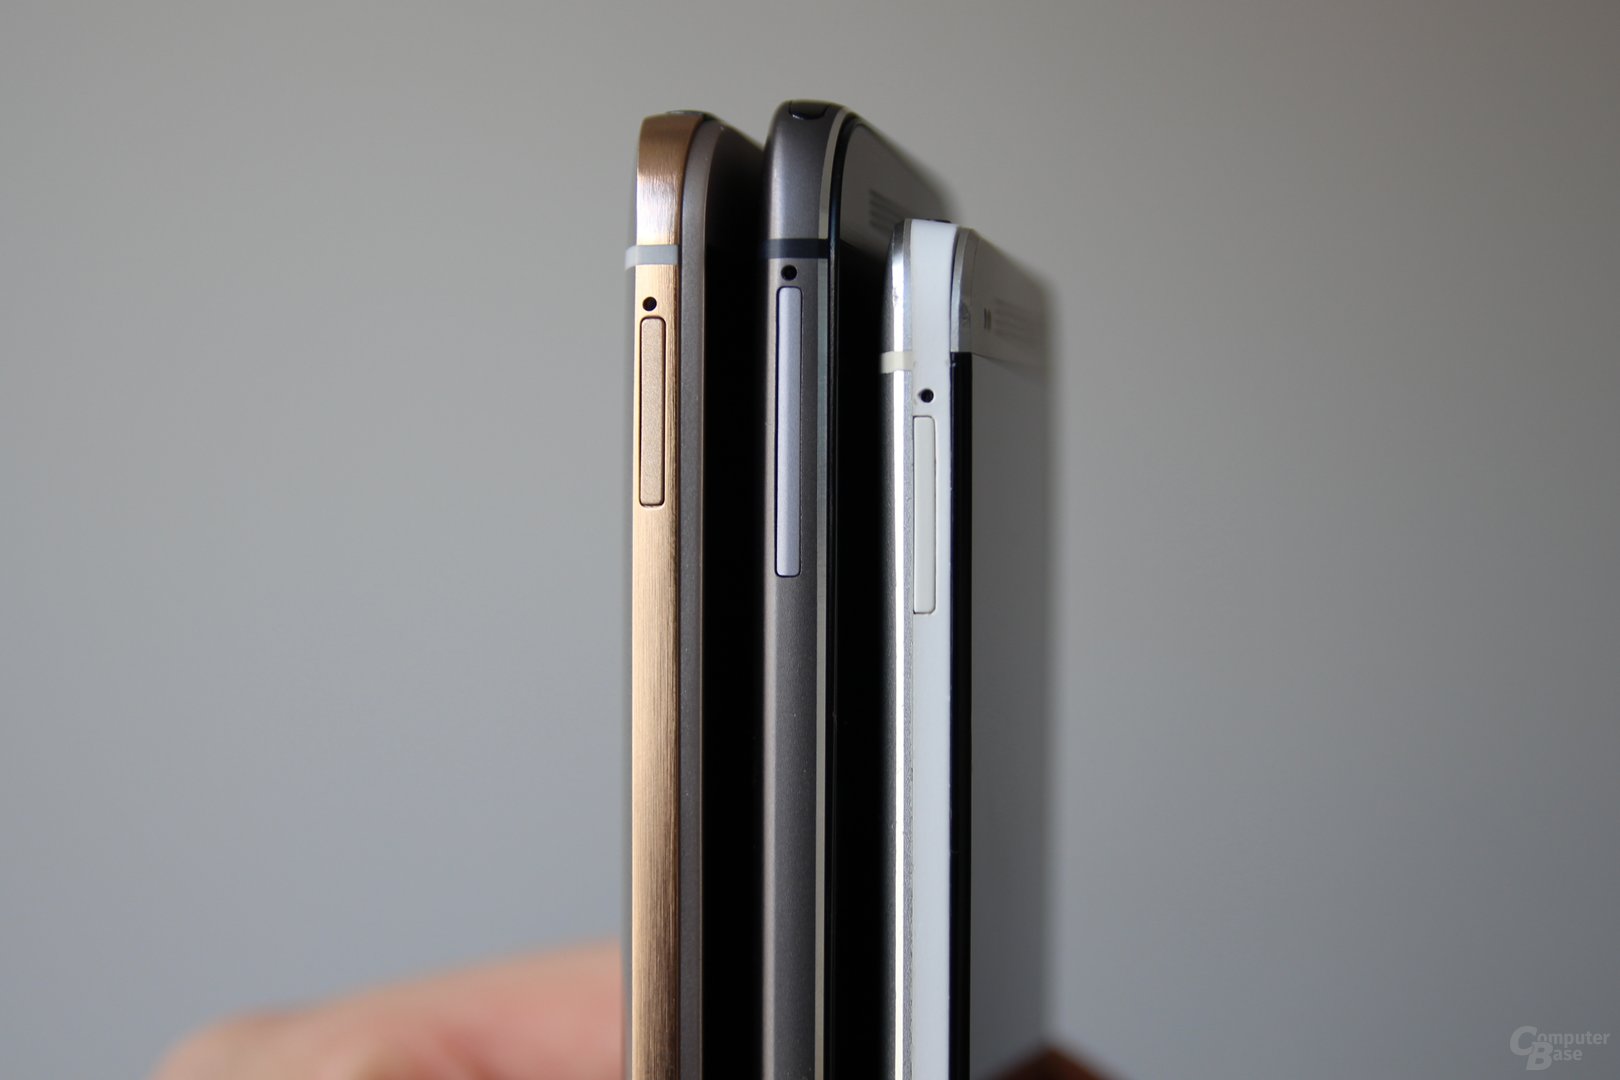 v.l.n.r.: HTC One M9, One (M8) und One